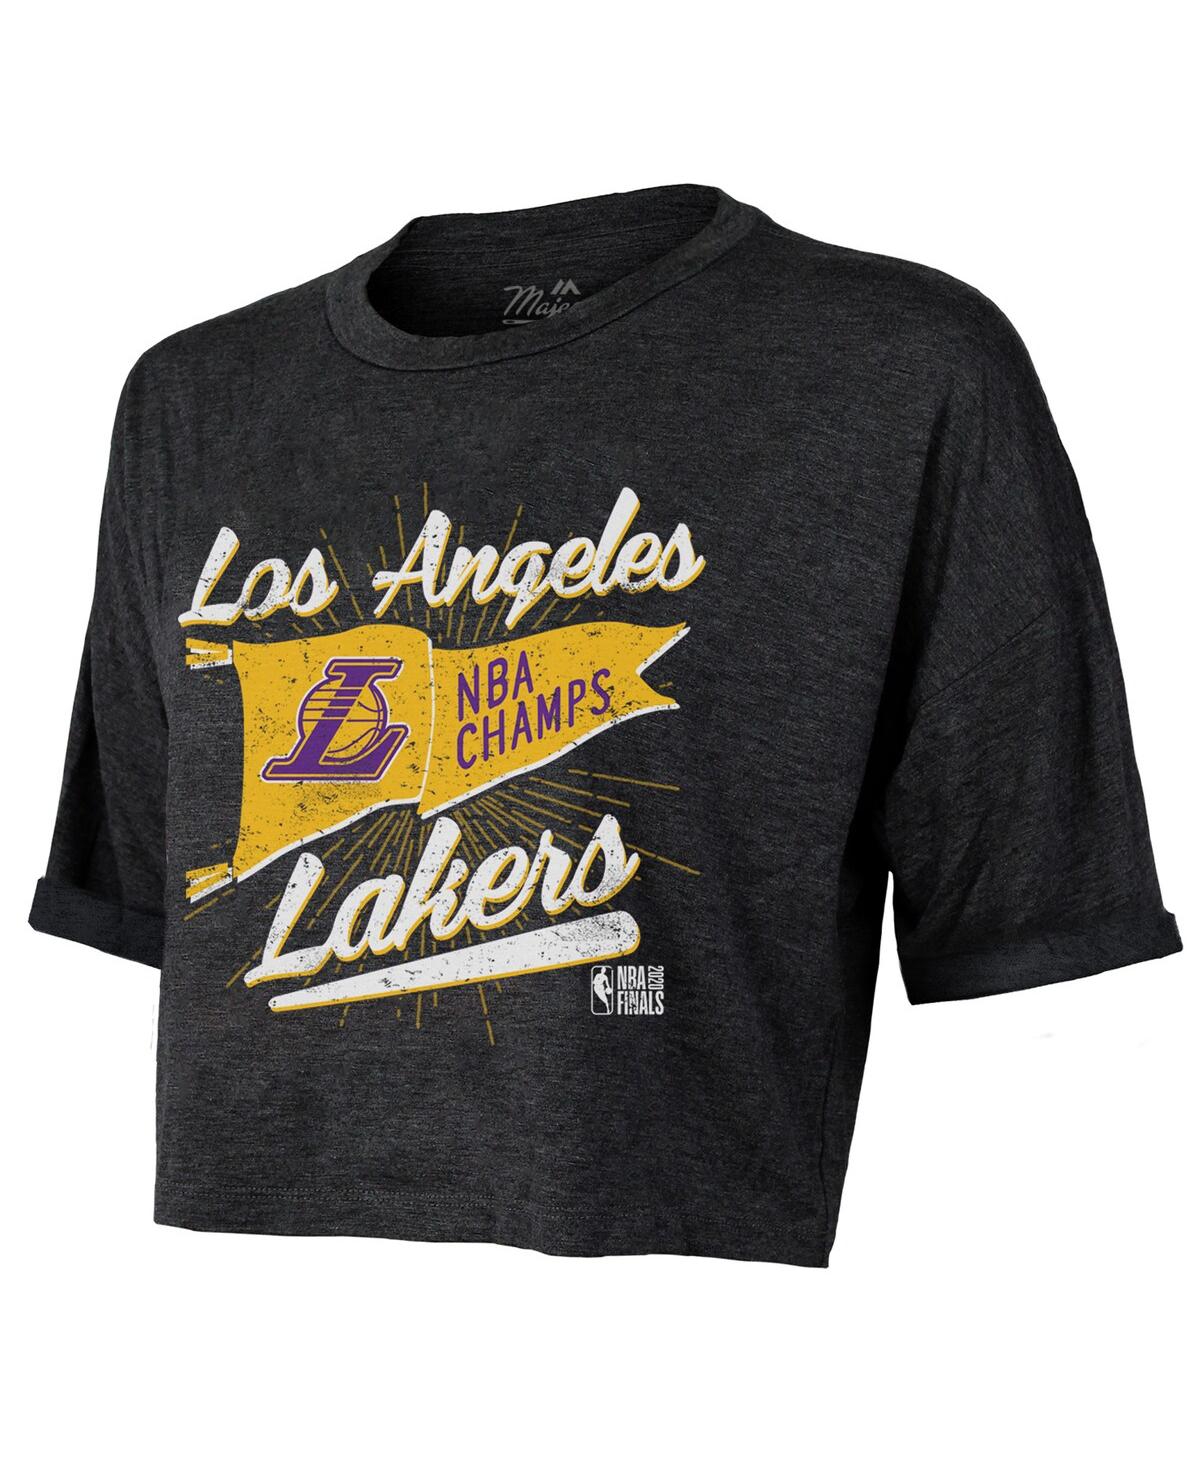 Women's Majestic Threads Black Los Angeles Lakers 2020 Nba Finals Champions Crop Top T-shirt - Black